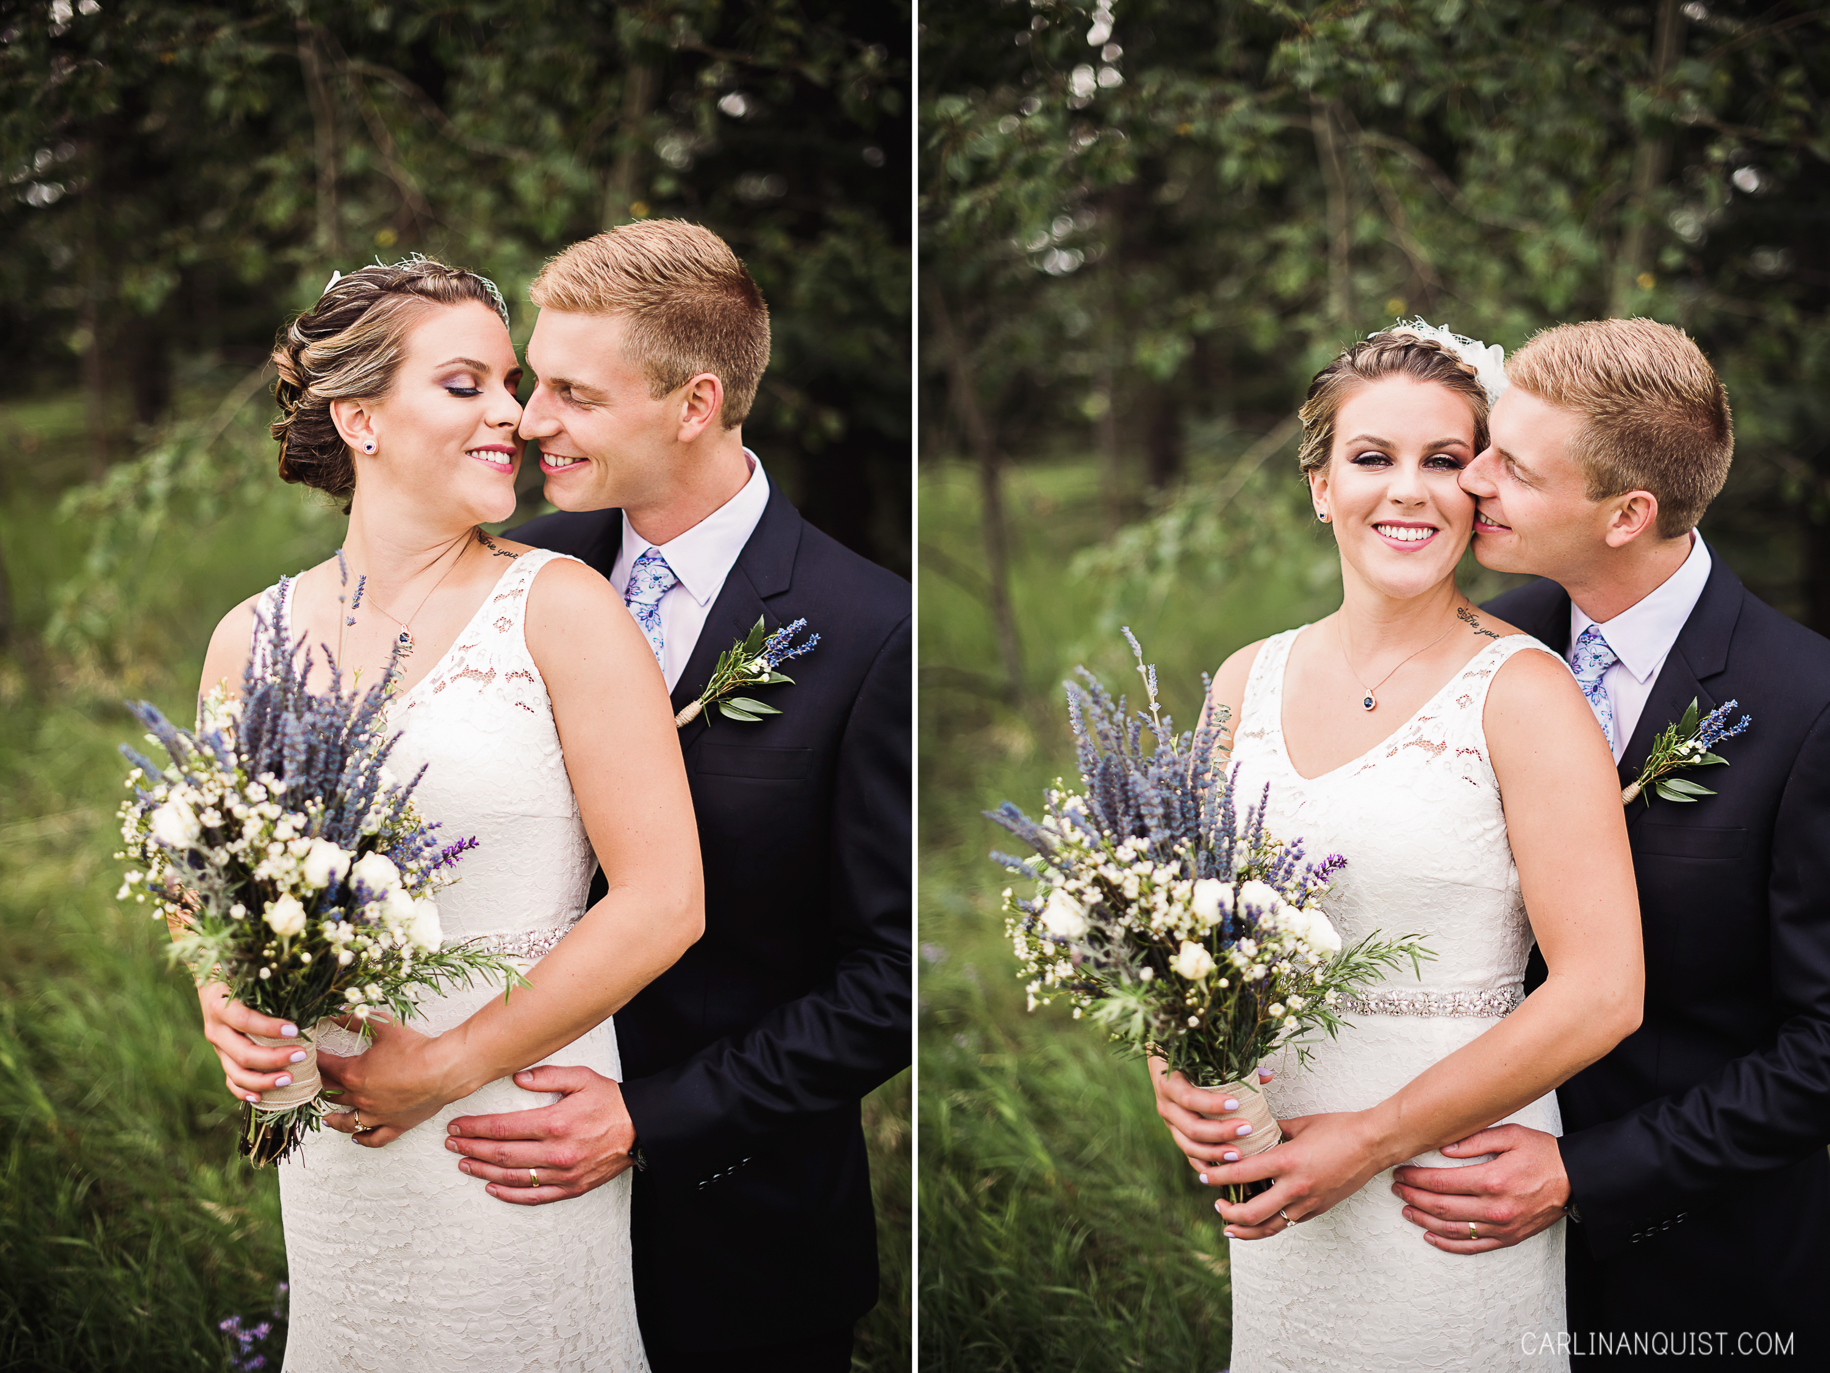 Romantic Wedding Photos | Calgary Wedding Photographer